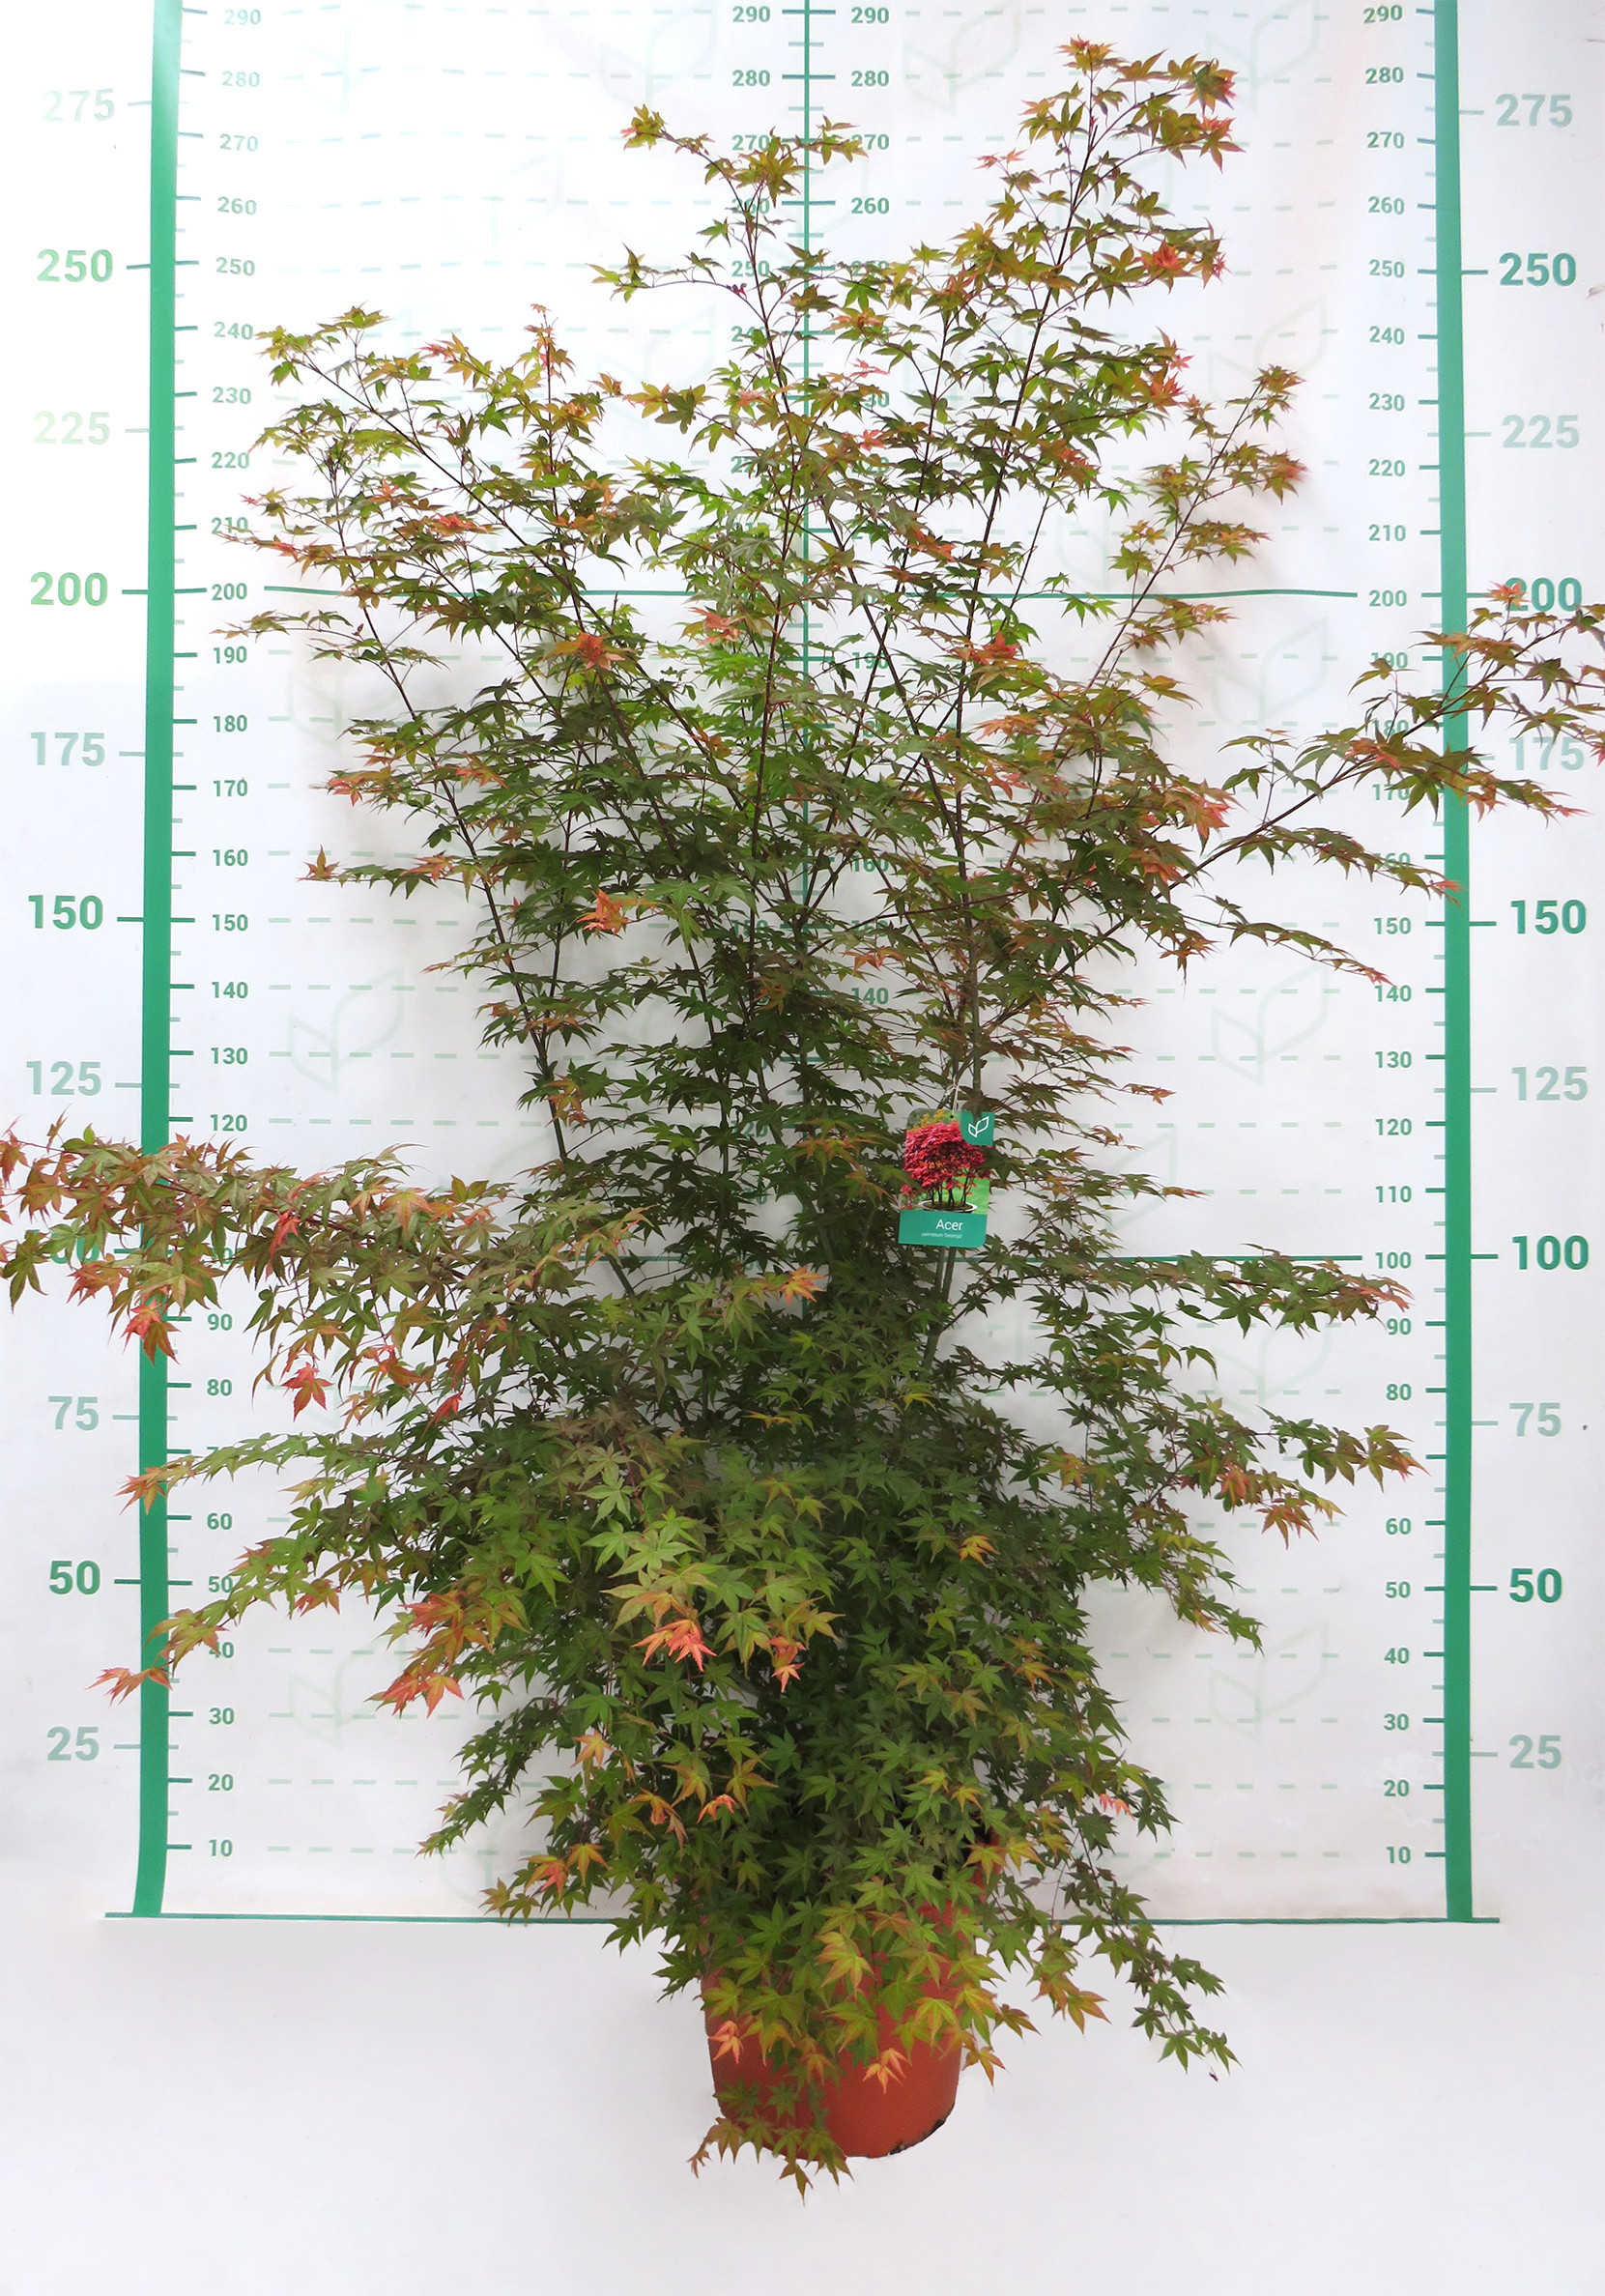 Acer palmatum "Deshojo" 35L Deco 190/200